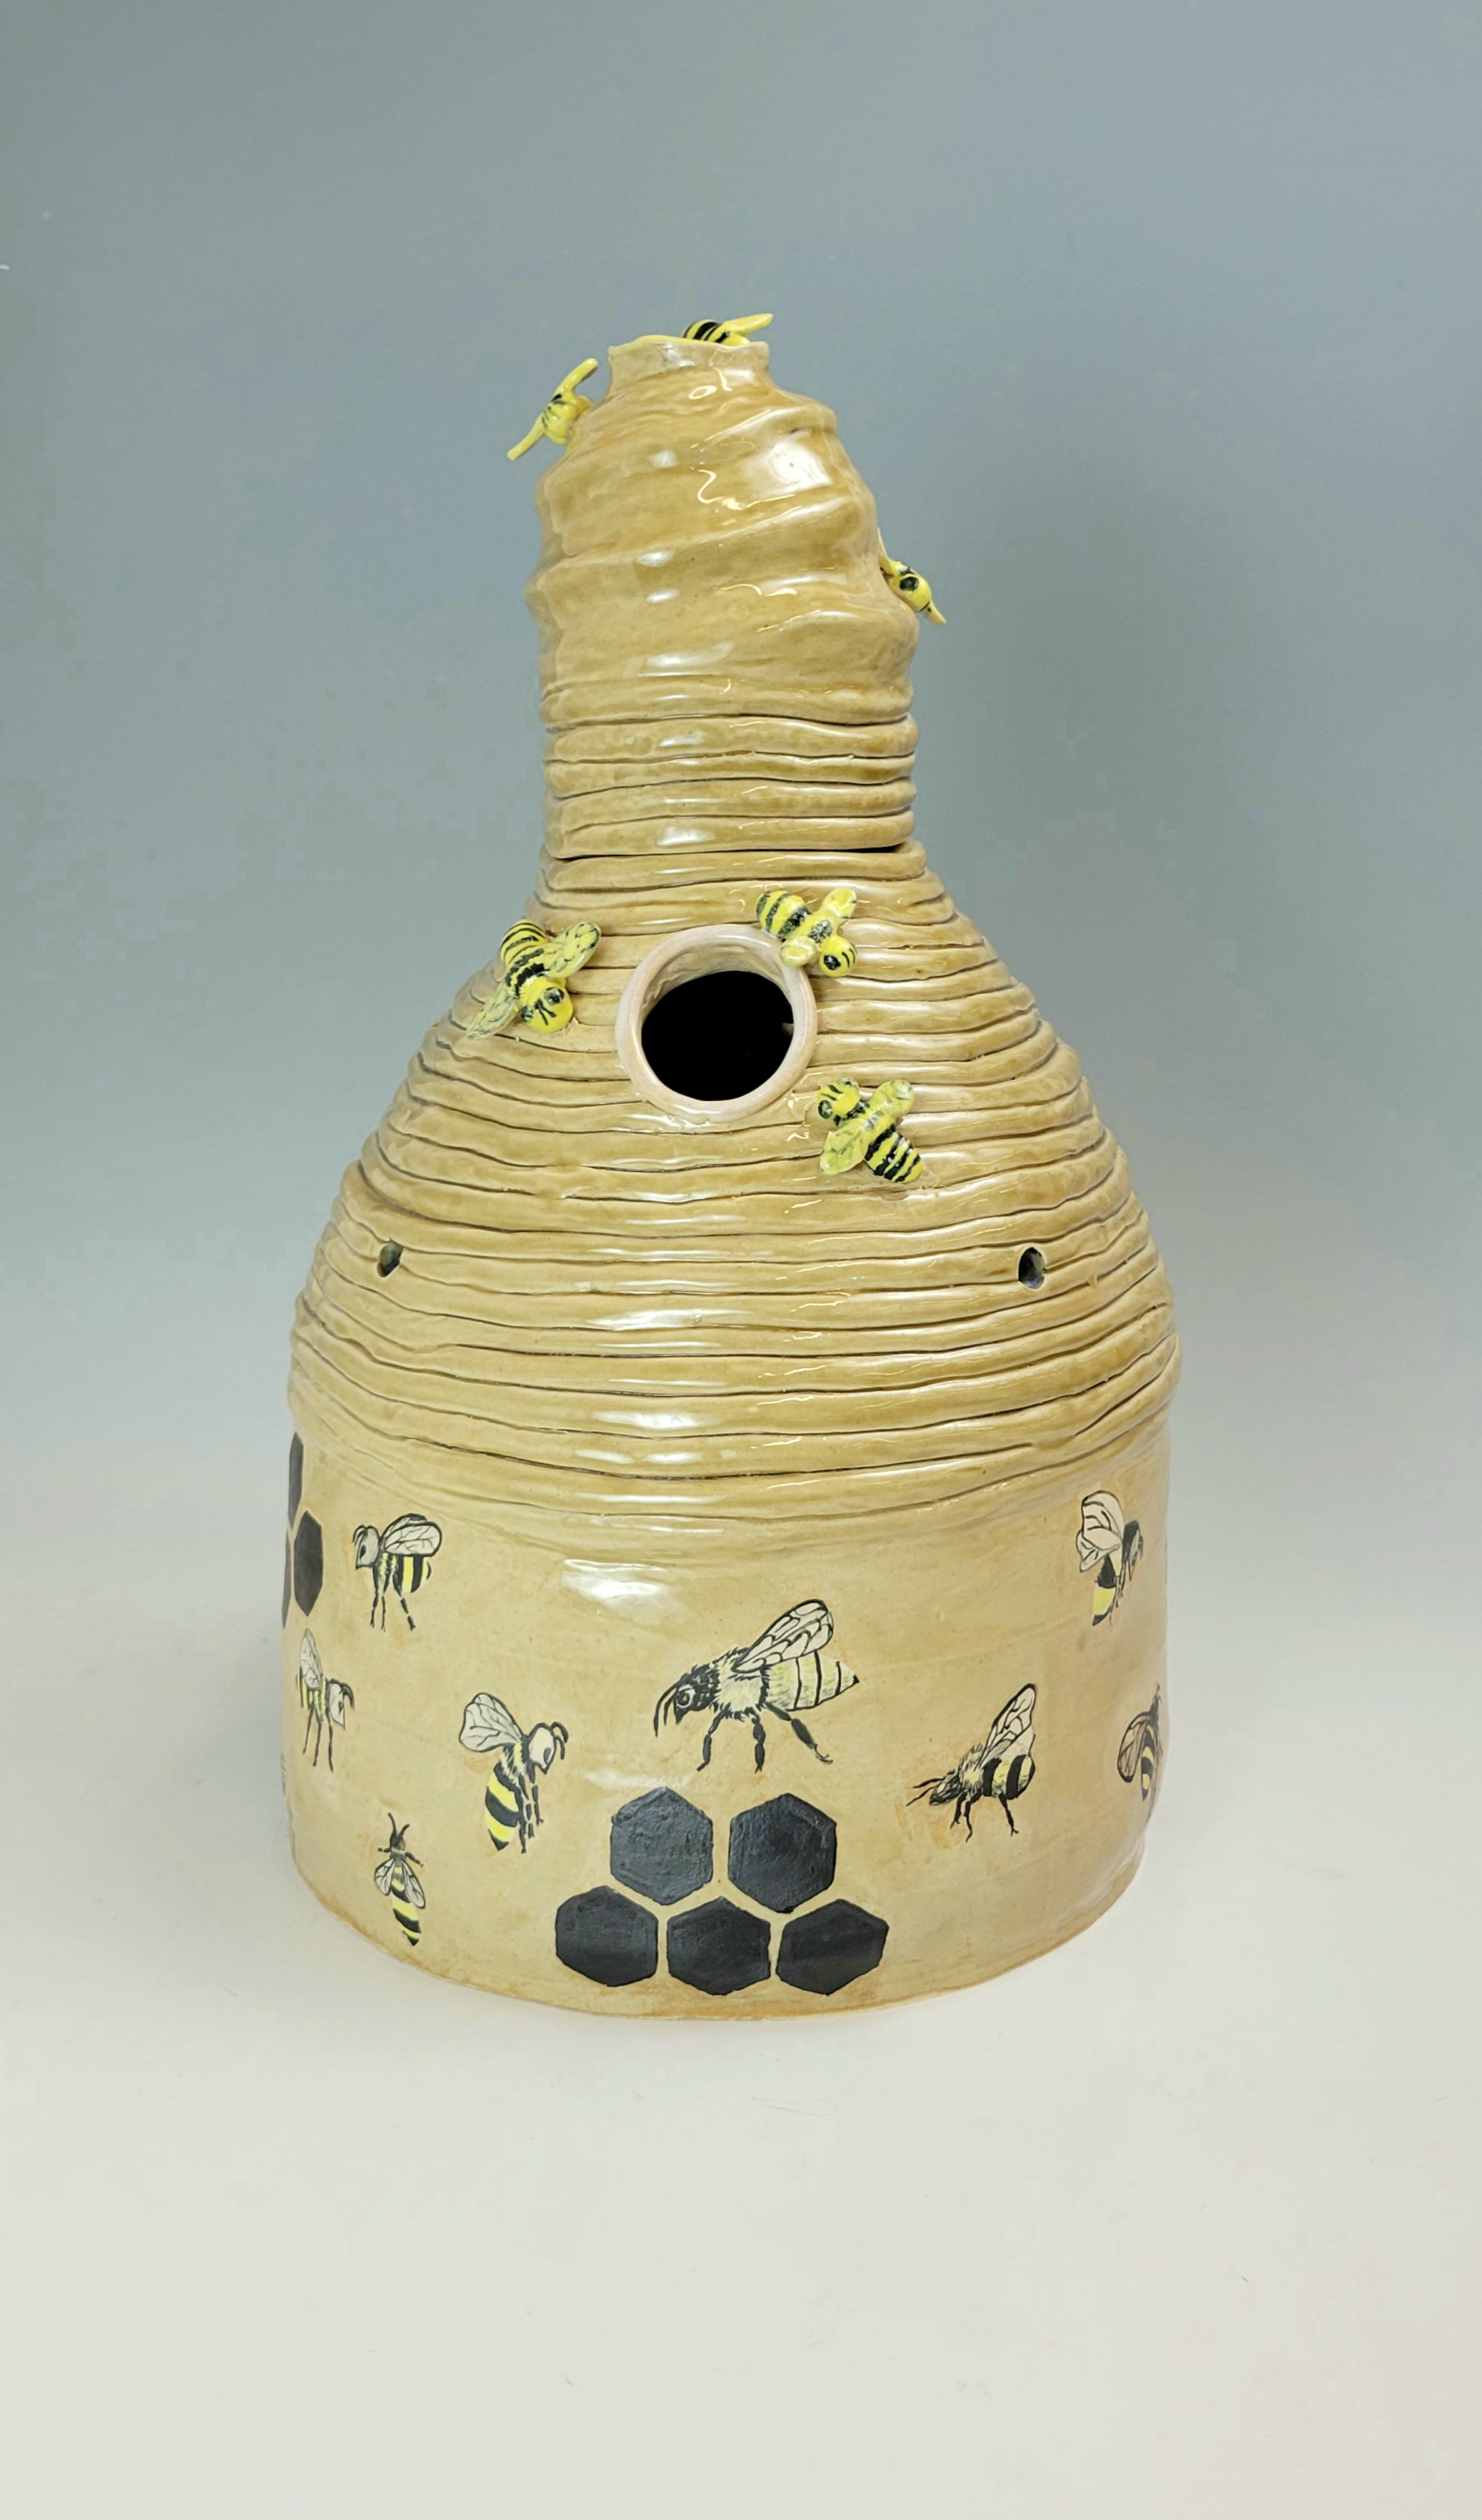 Image of the Beehive ceramic vase sculpture.